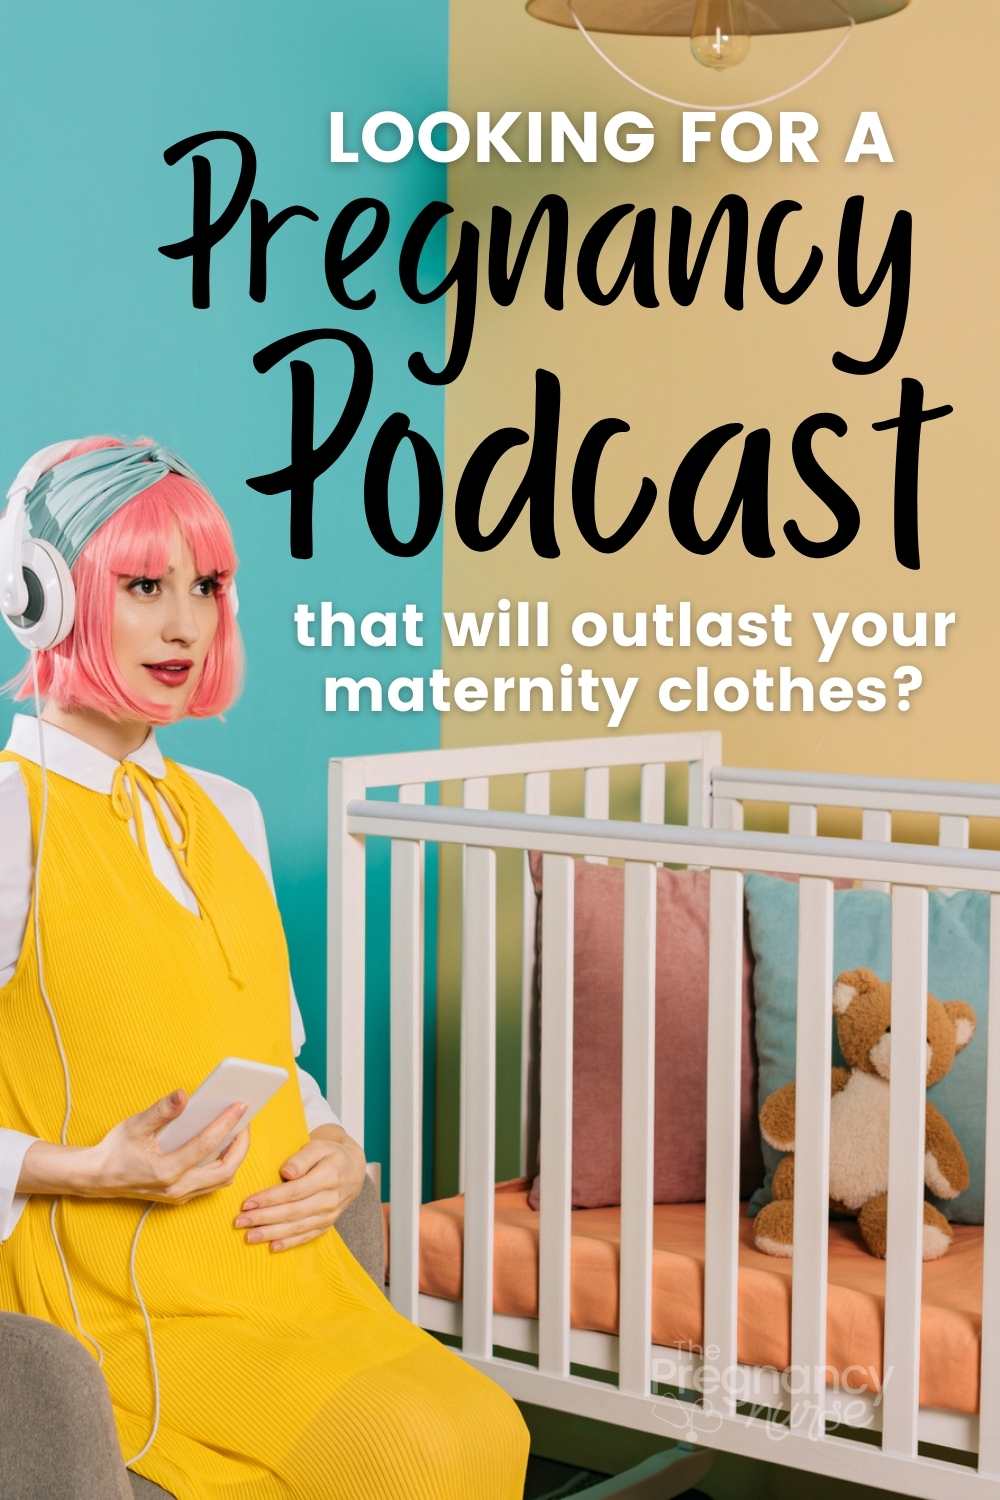 The Pregnancy Nurse Podcast